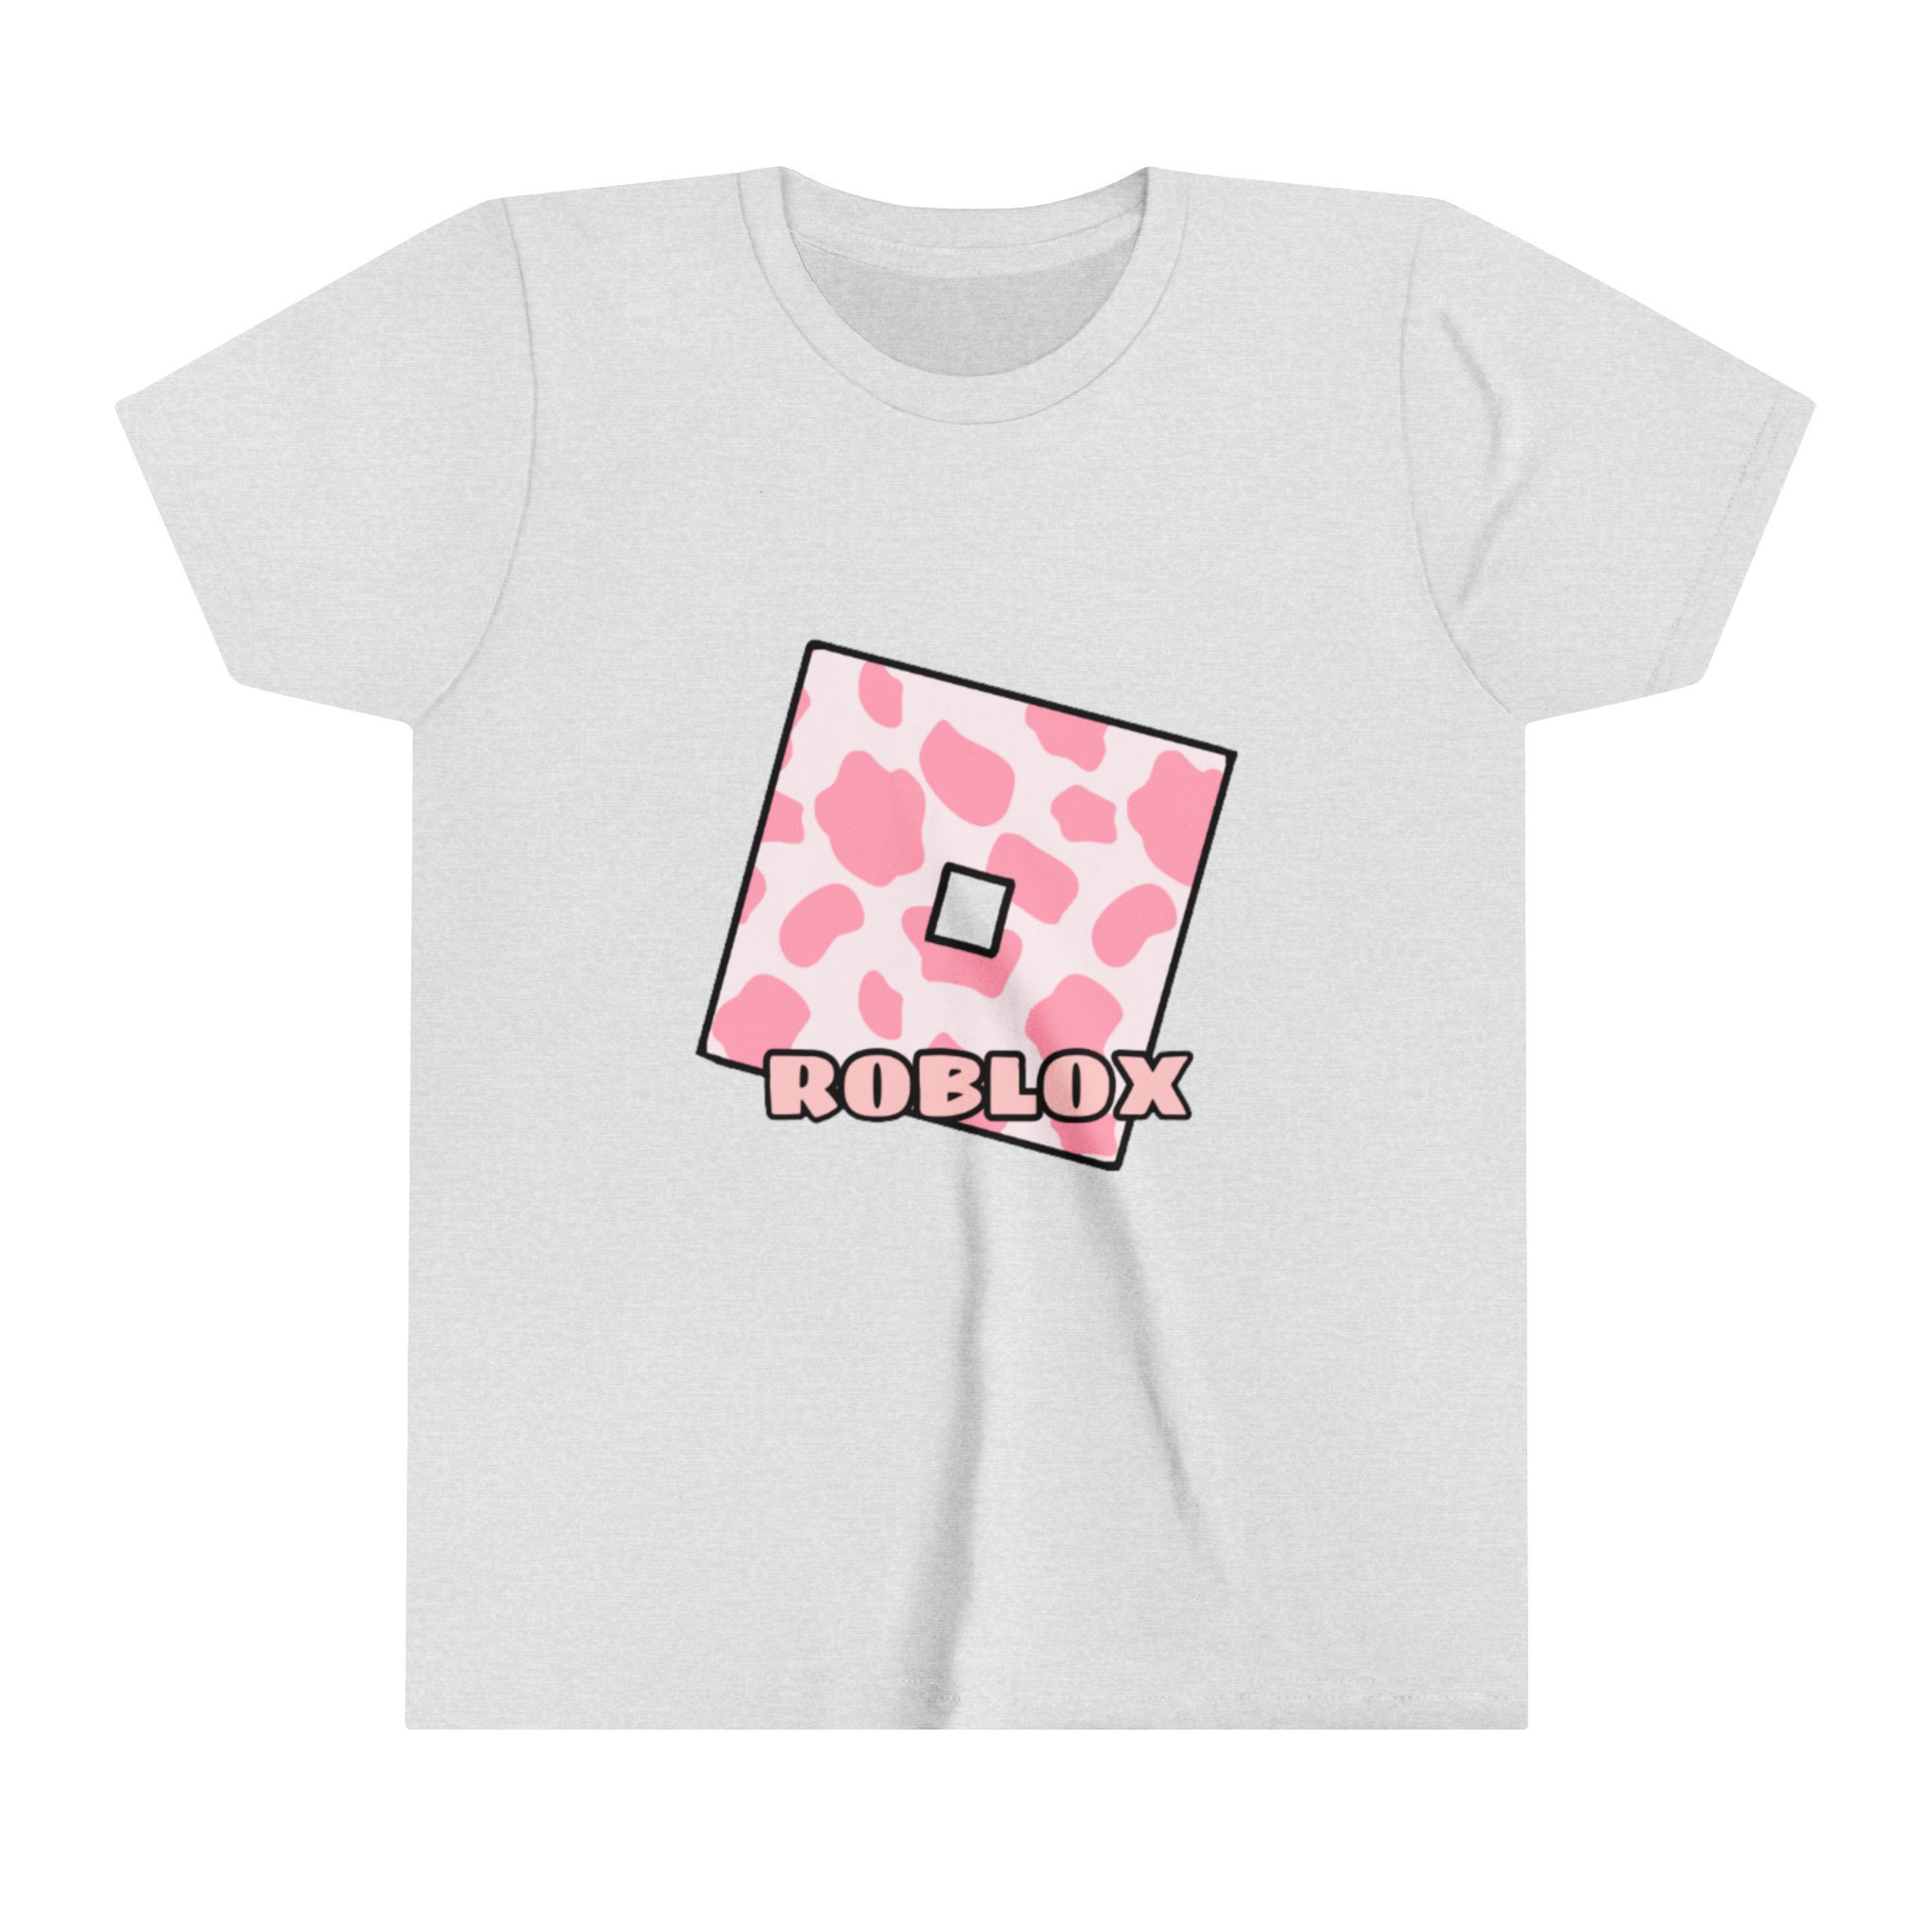 Youth Shirt Roblox Shirt Tshirt for Girls Gift for Girls 